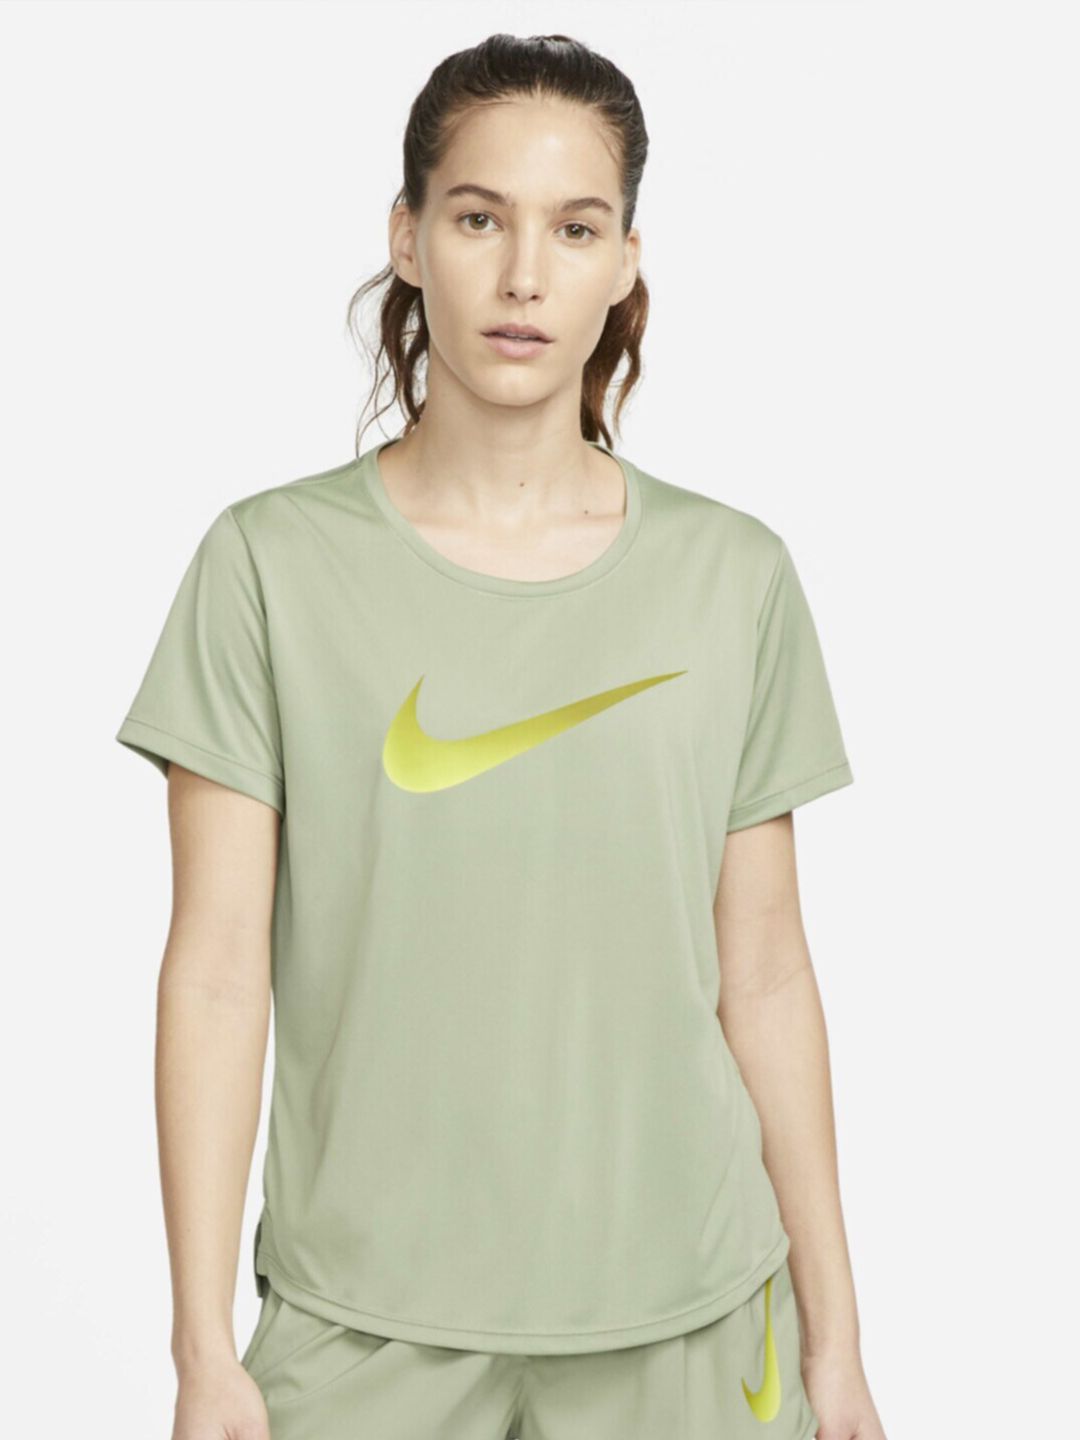 Nike Women Dri-FIT One Short-Sleeve Running Top Price in India